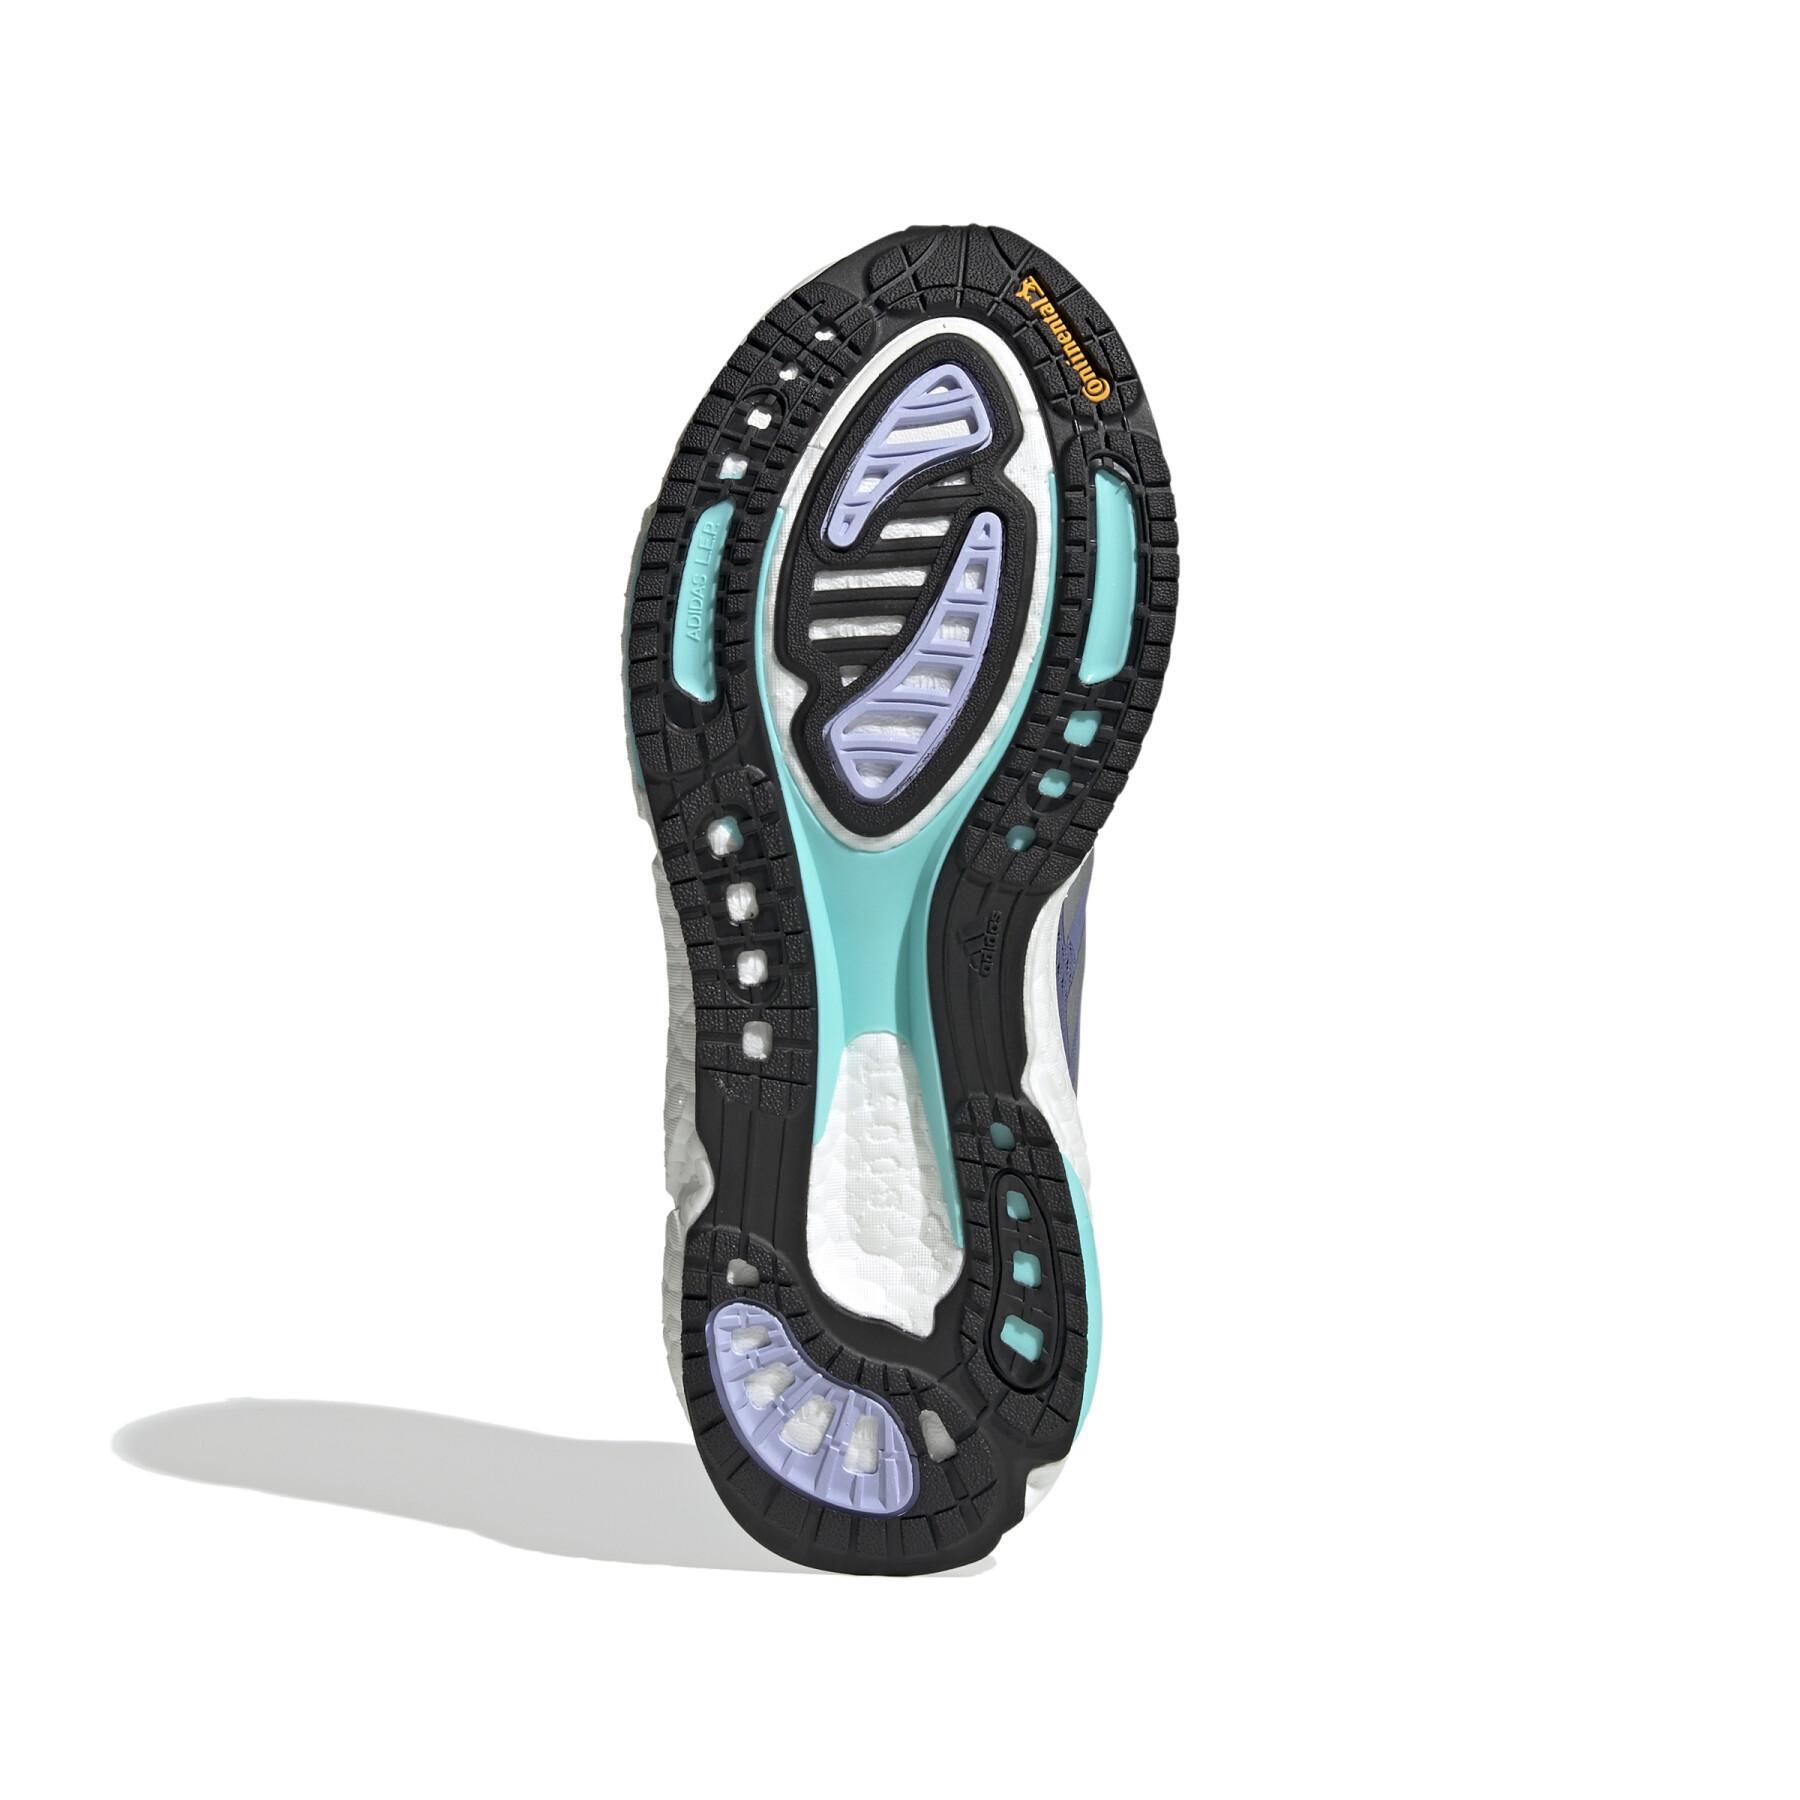 Zapatillas de running para mujer adidas SolarBoost 3